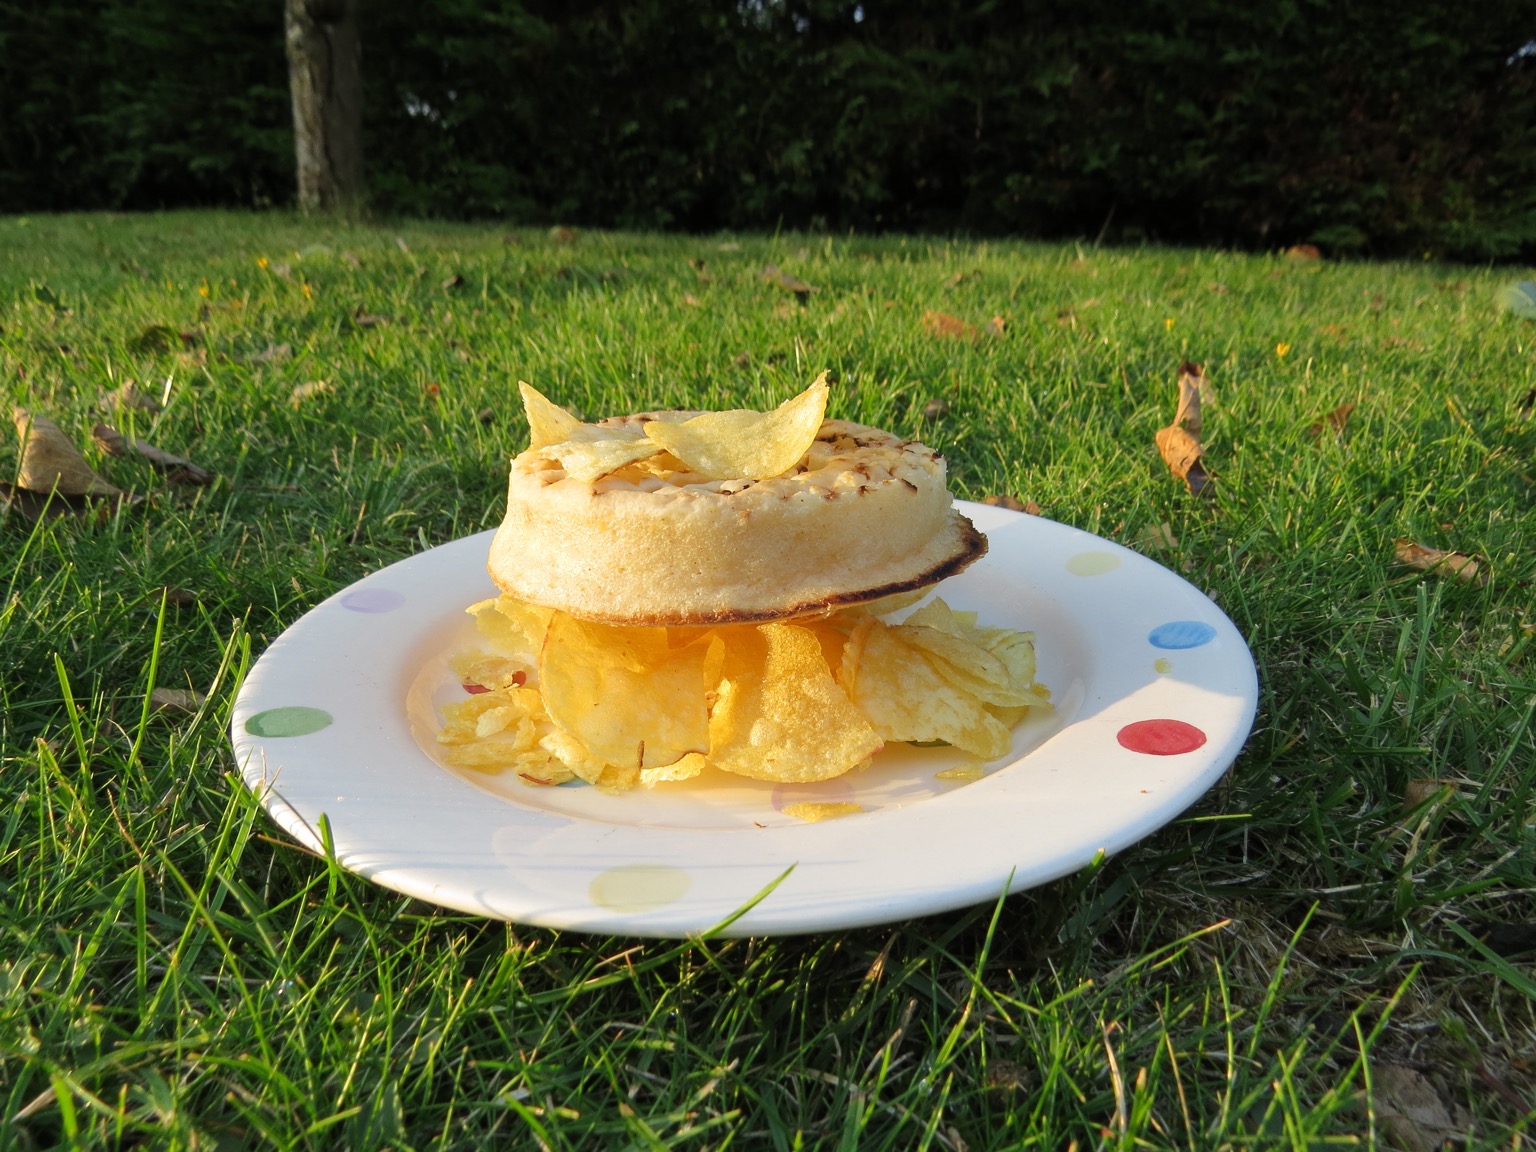 Crumpet among crisps on a plate on grass